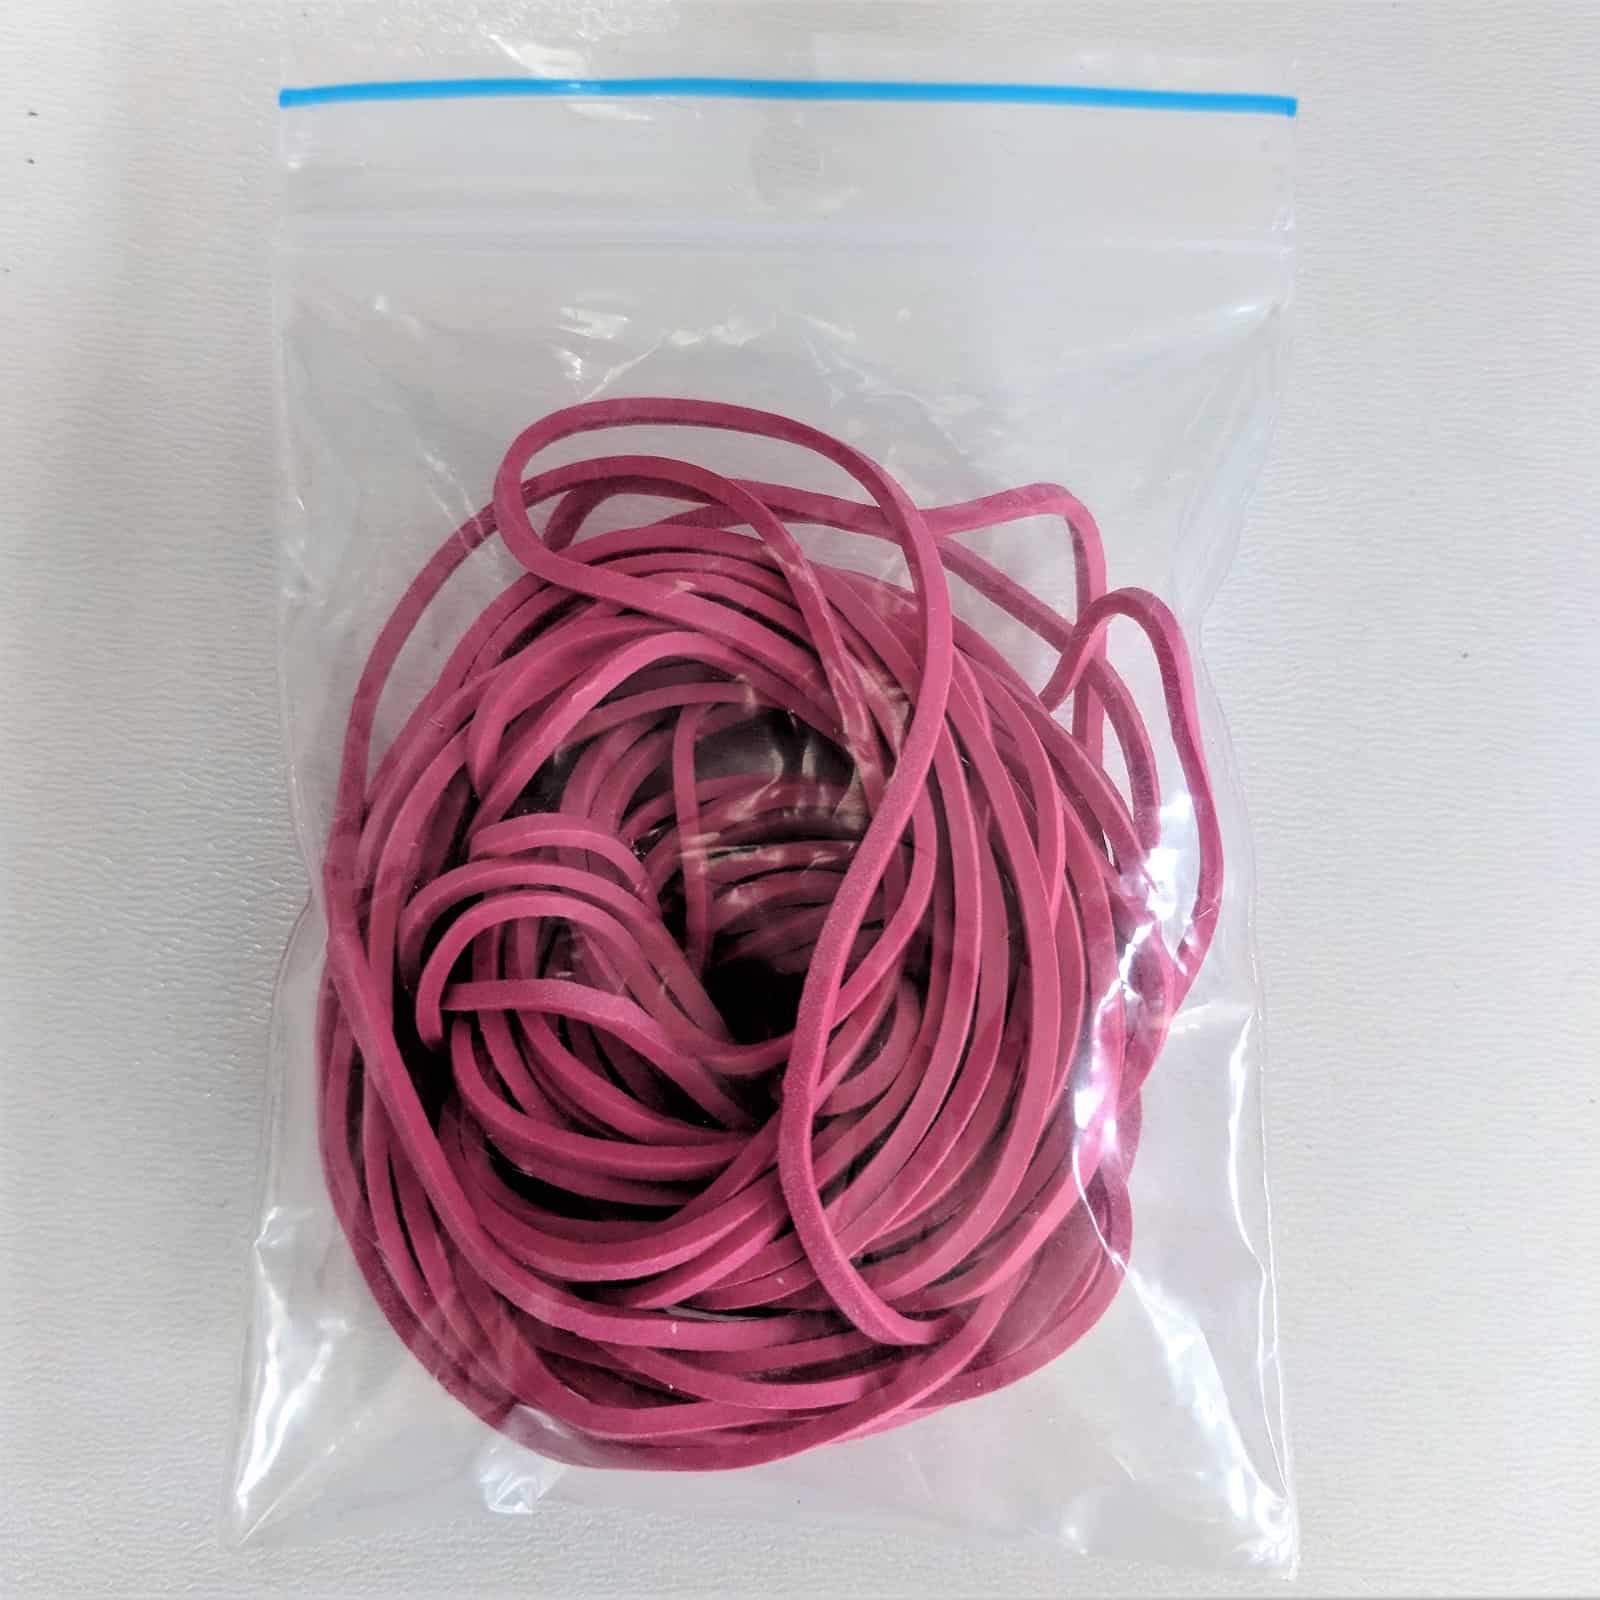 Gekleurde elastiekjes - Roze Groen Blauw Zwart - € 1,- per zakje